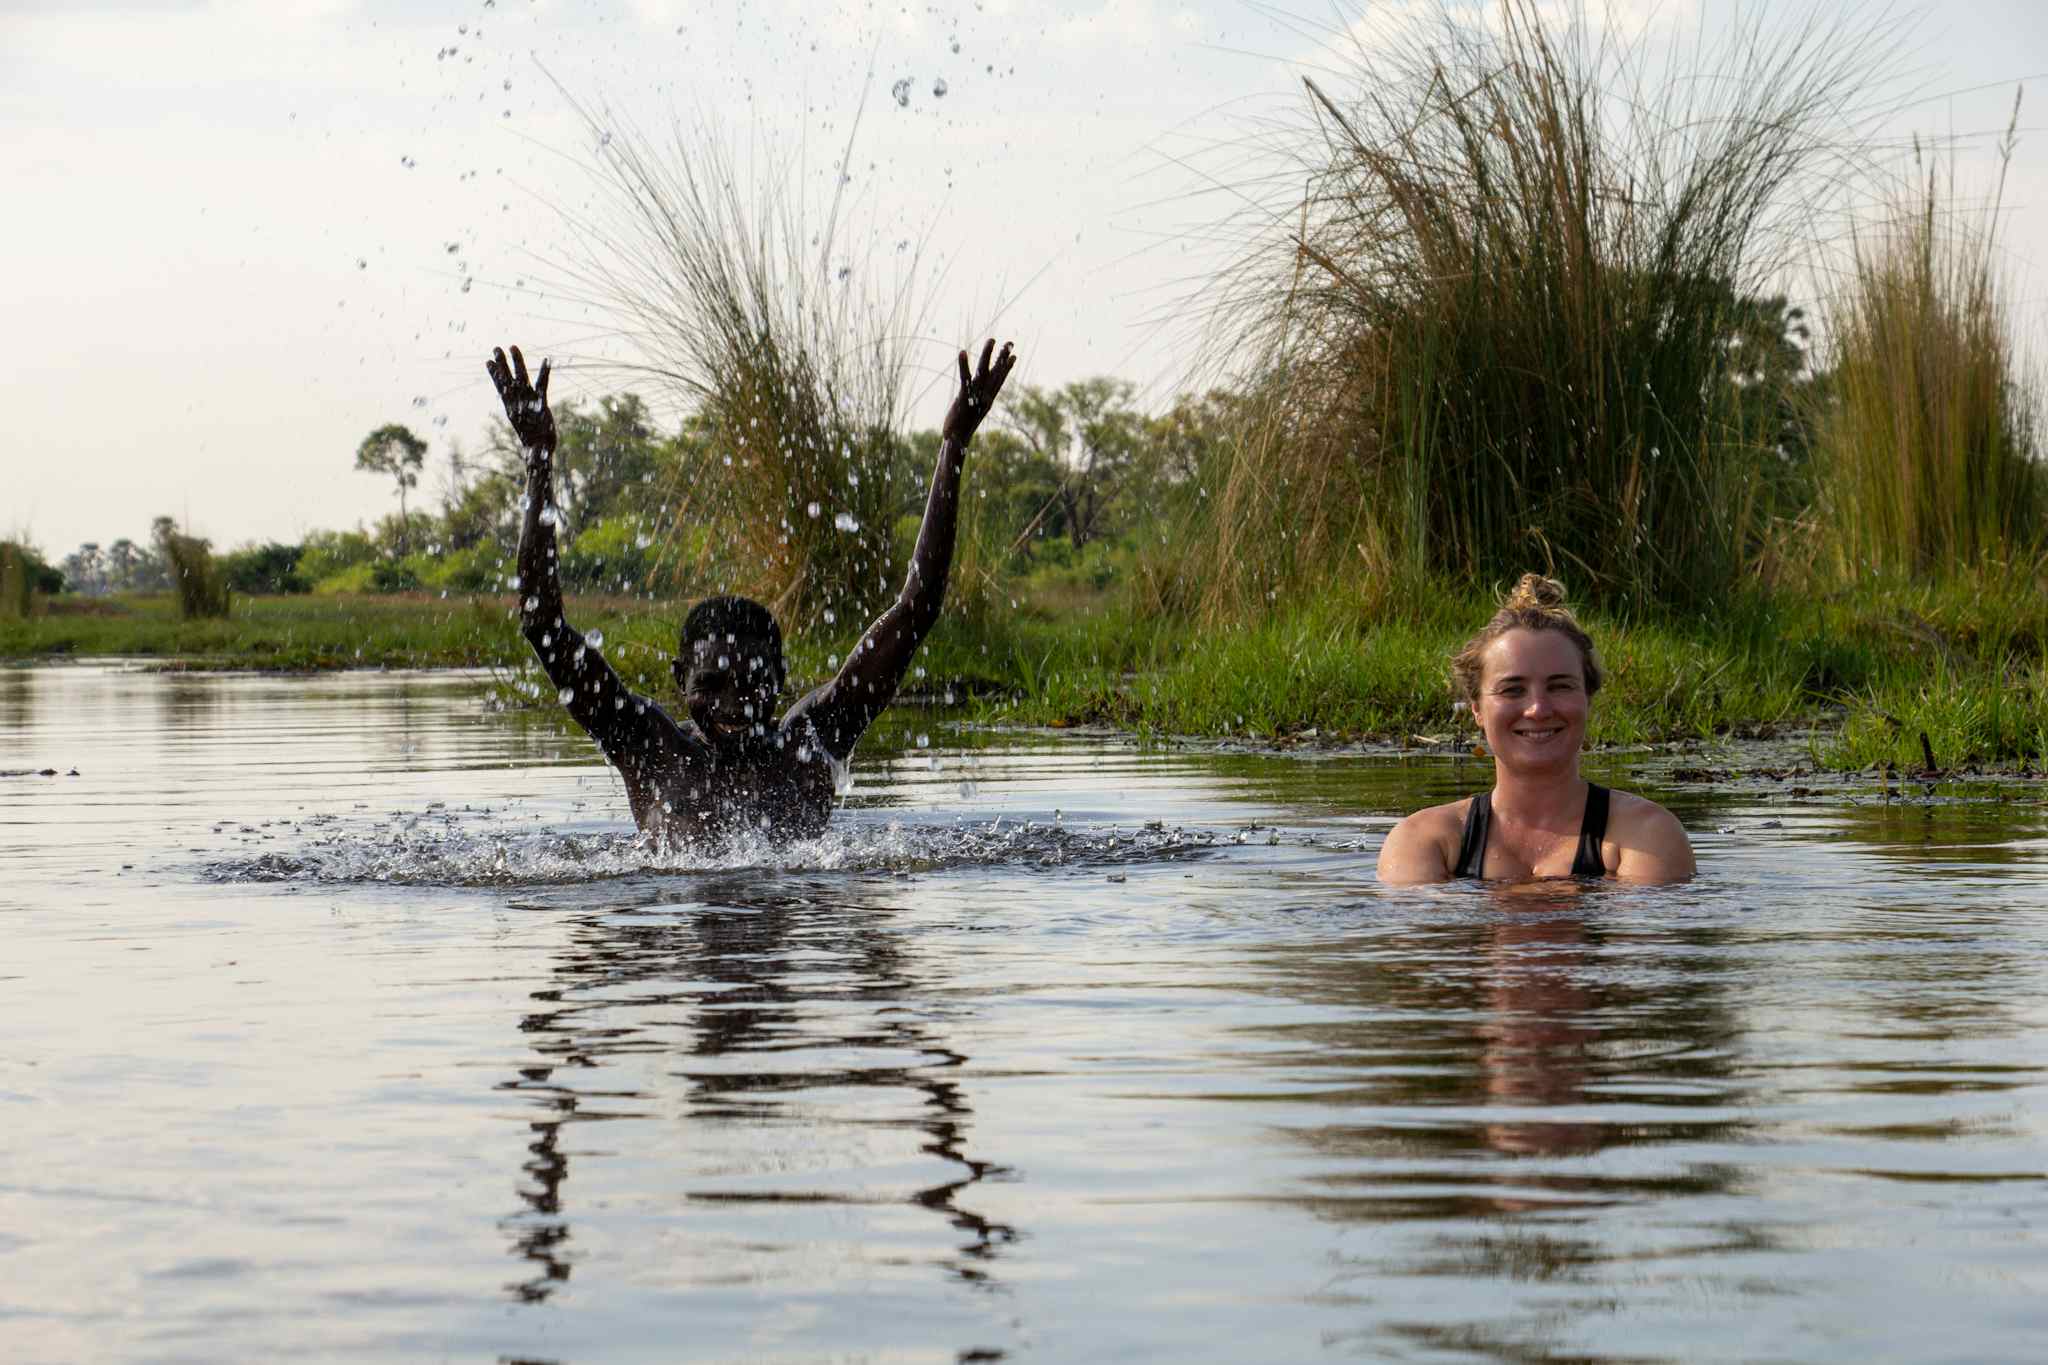 Swimming in the Okavango Delta, Botswana
MBA staff image: Chris Kearney